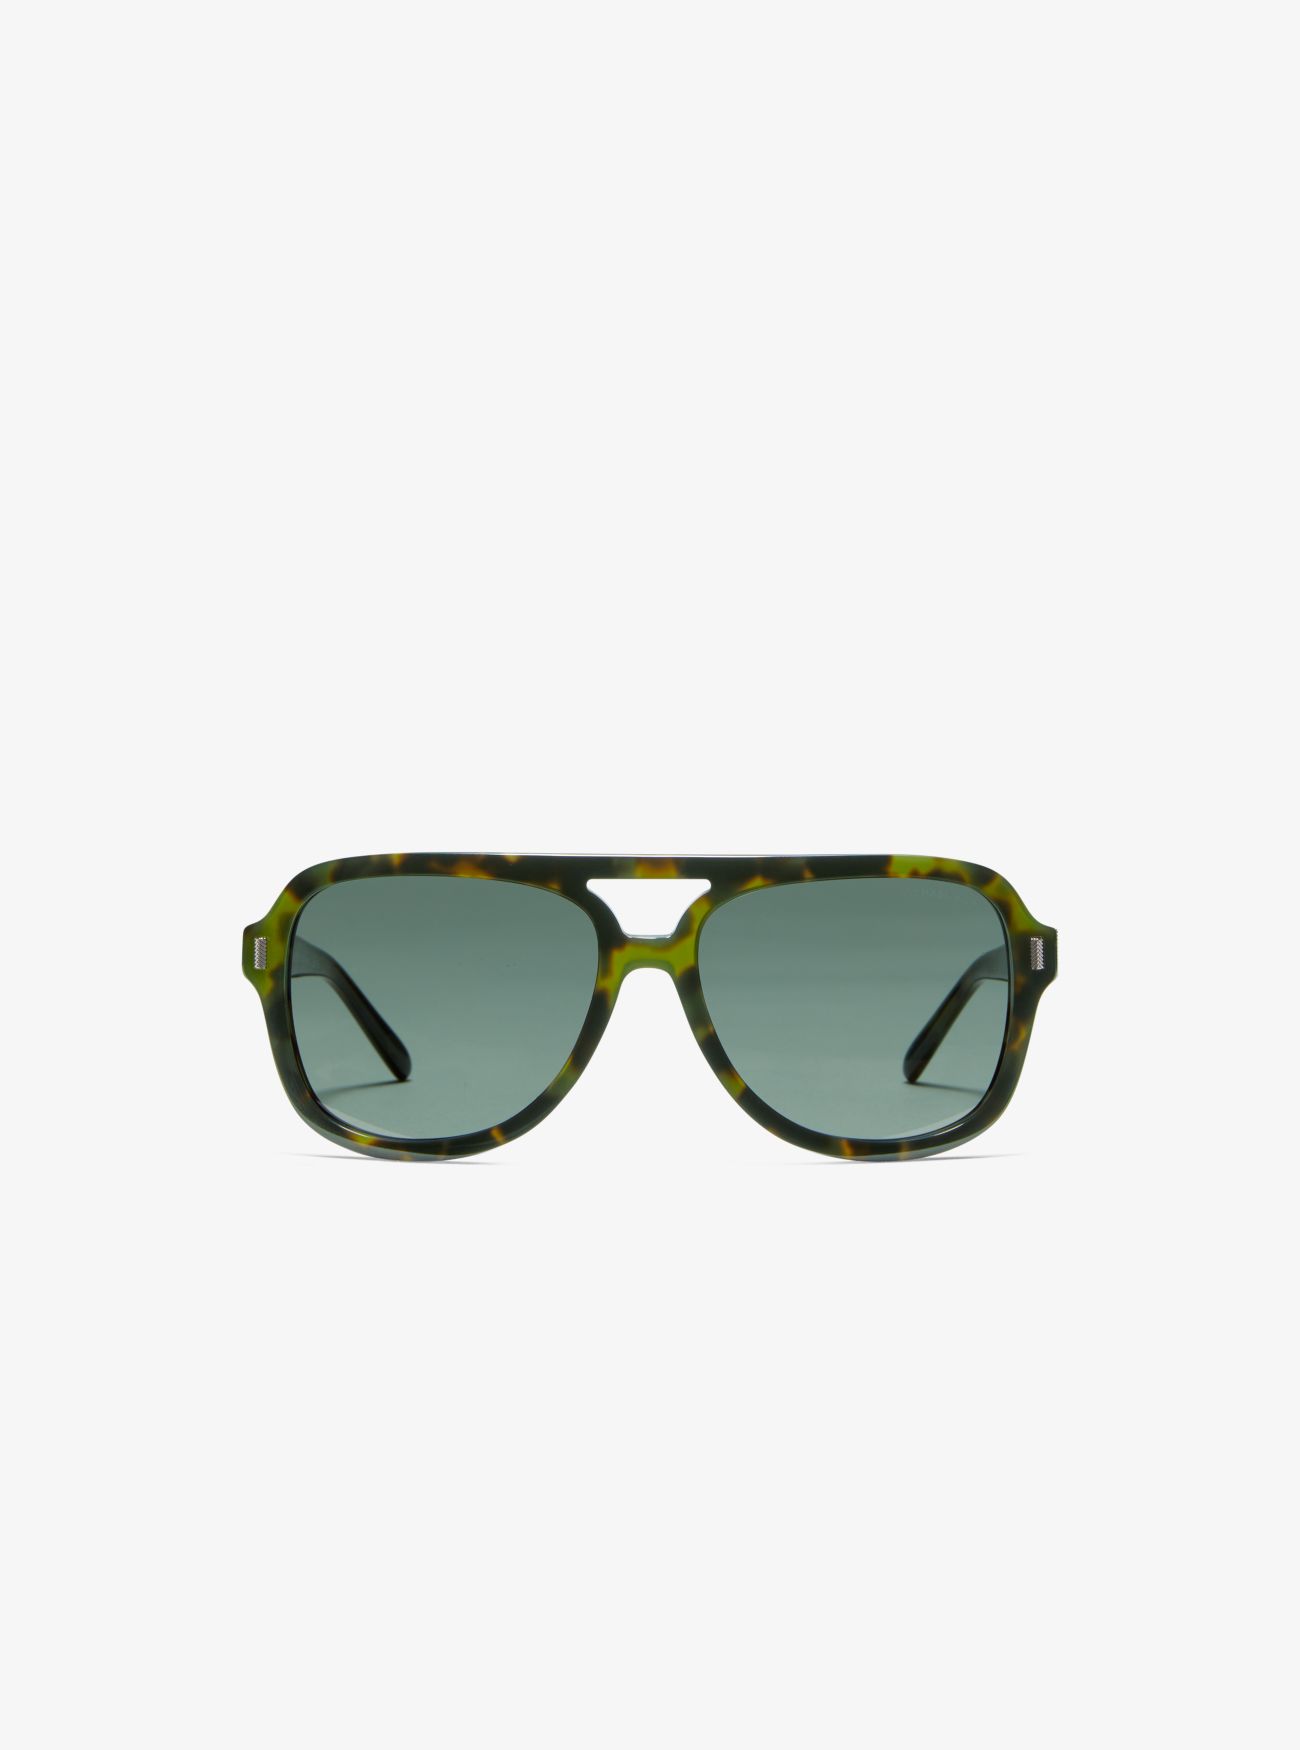 MK Durango Sunglasses - Amazon Green - Michael Kors